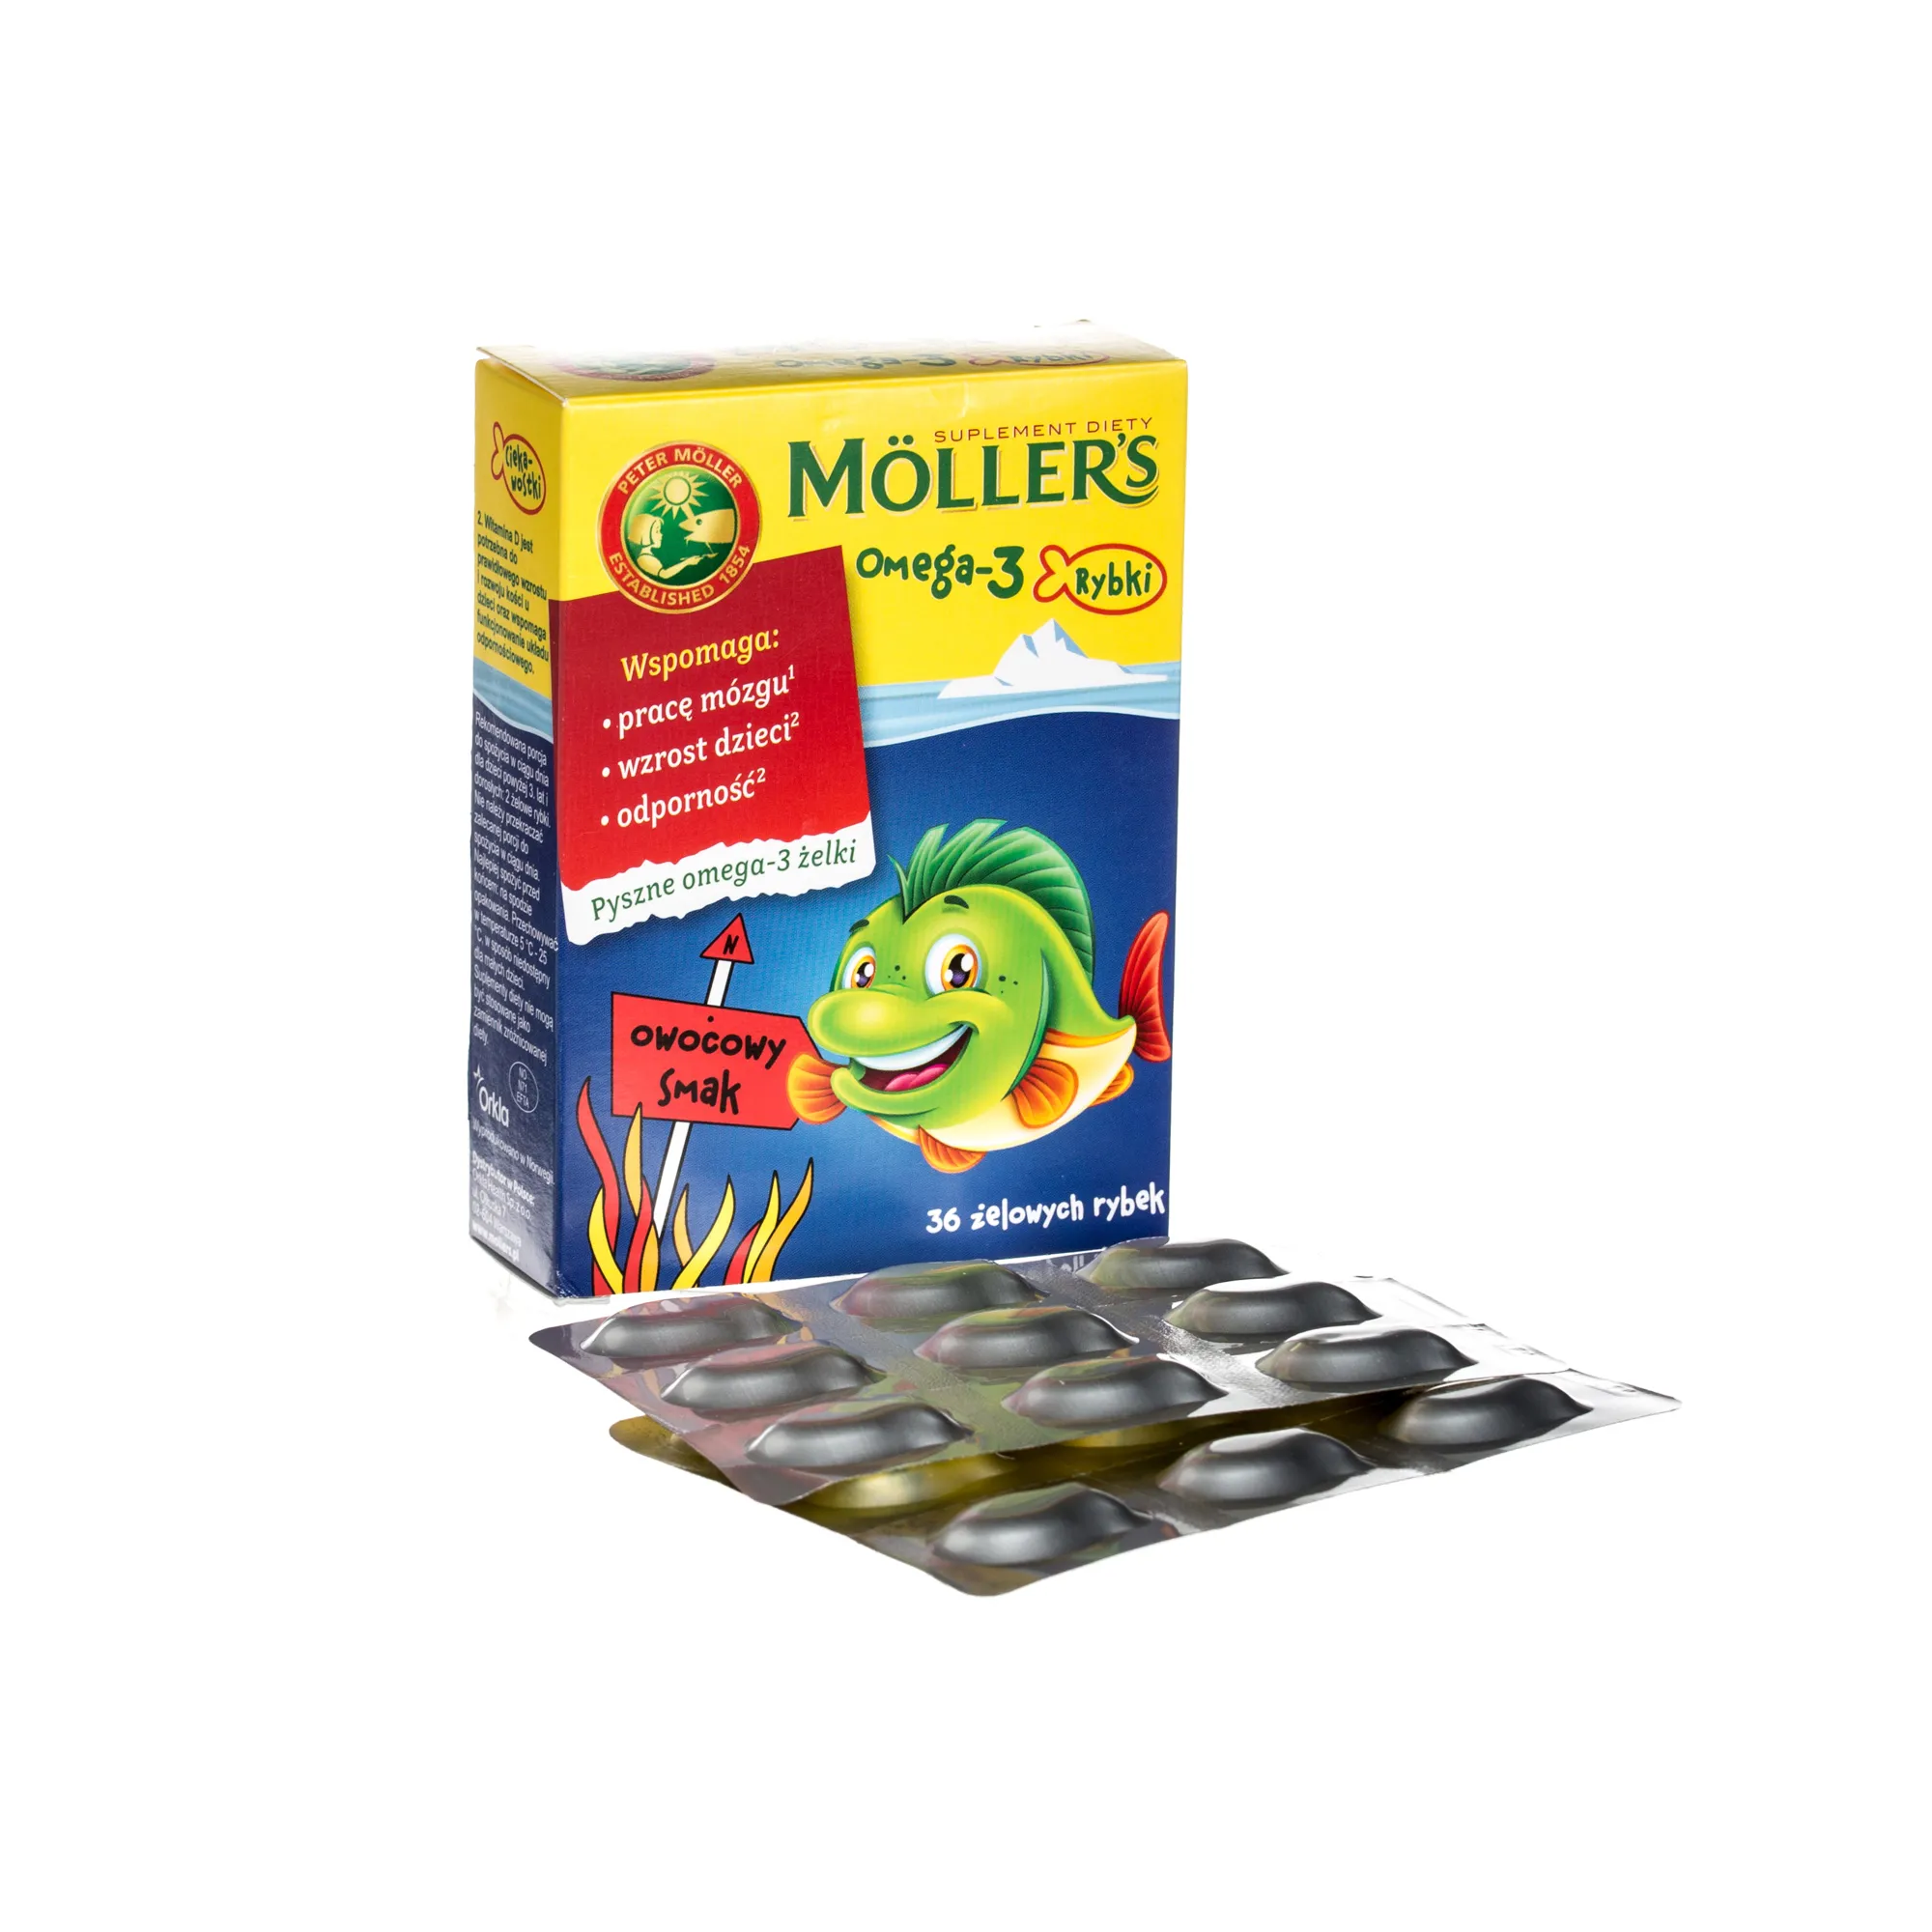 Moller's Omega-3 Rybki, 36 żelków 